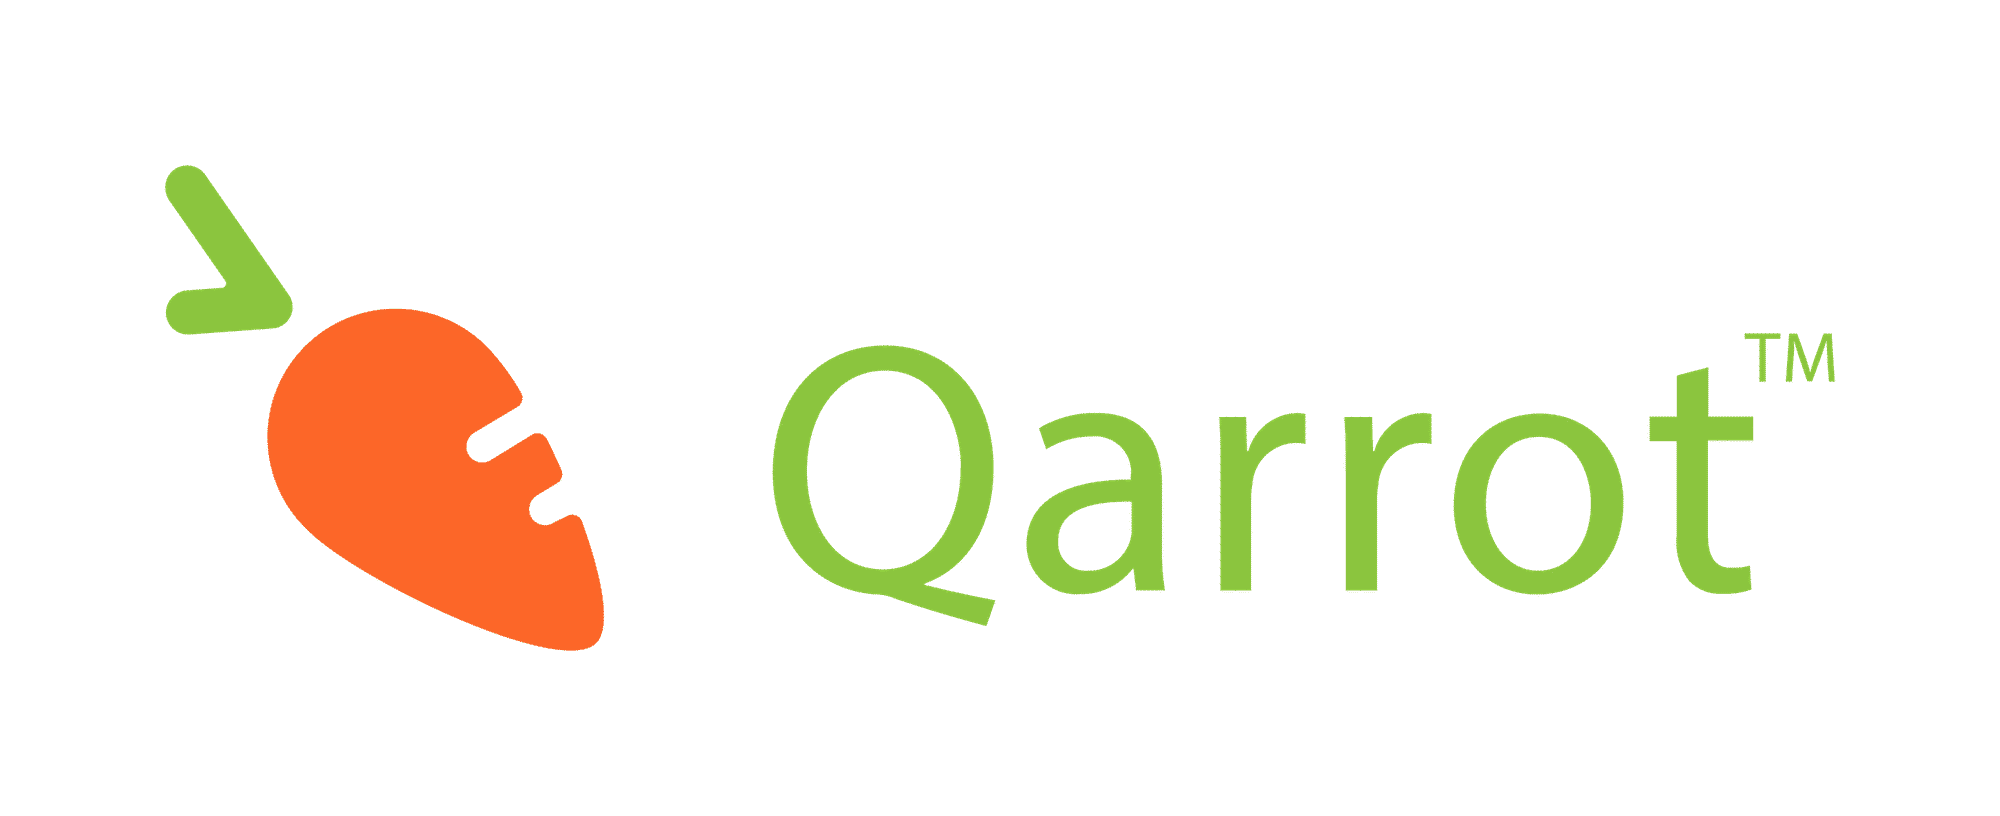 Qarrot - Employee Recognition Software